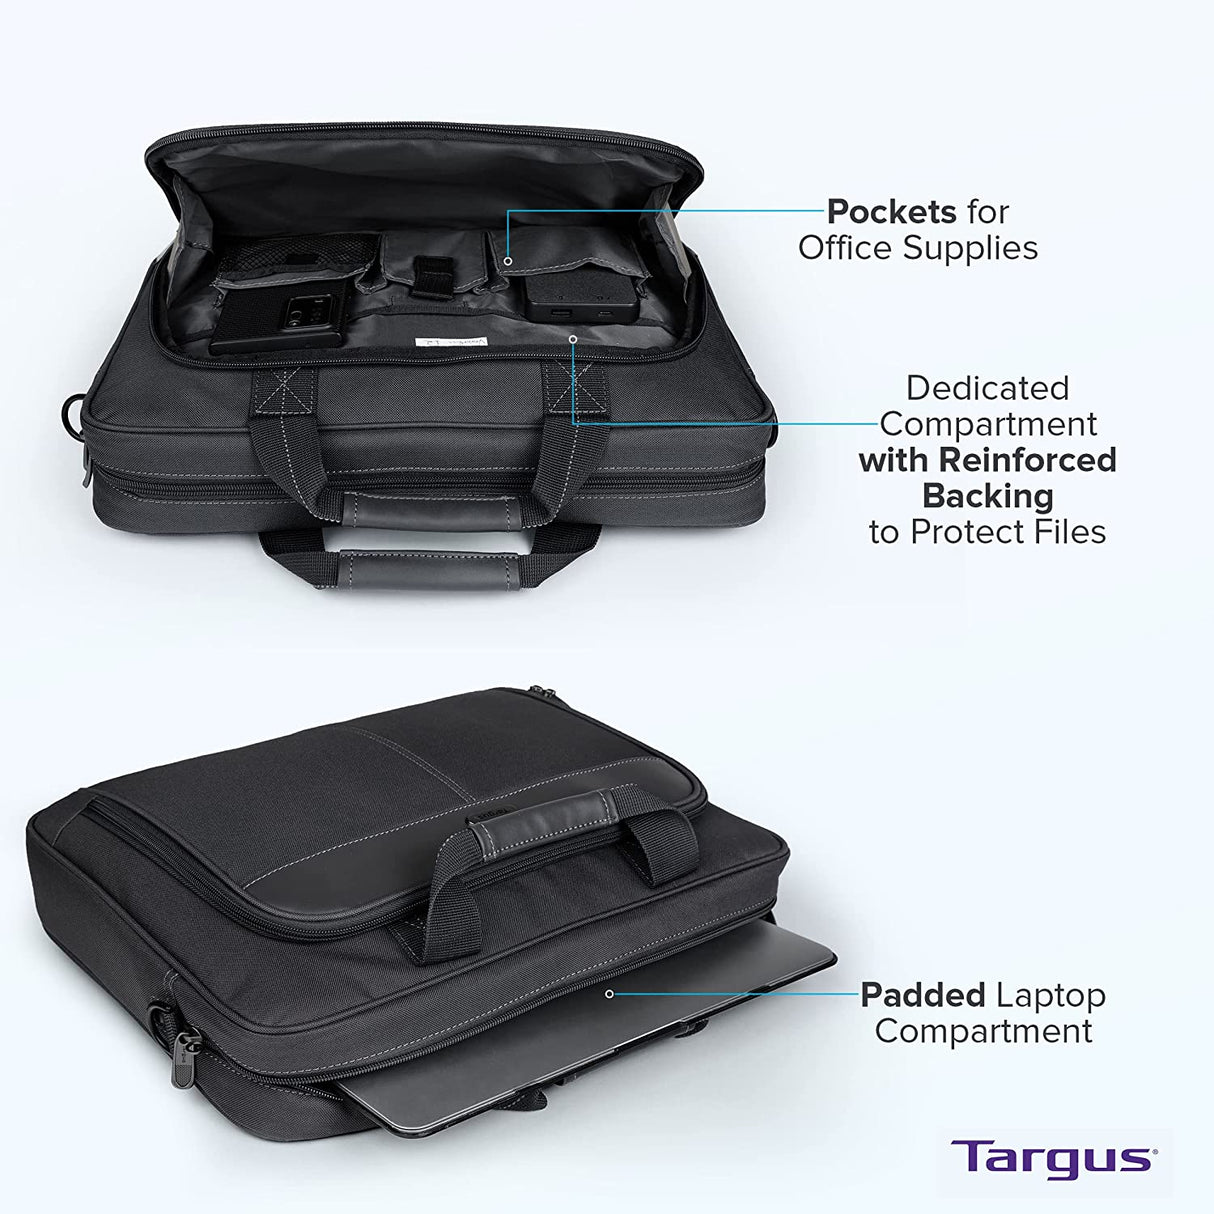 Targus Laptop Bag — Black 15.6" Classic Slim Briefcase Messenger Bag, Spacious, Ergonomic, Foam Padded Laptop Case for Devices Up To 16" (TCT027US)